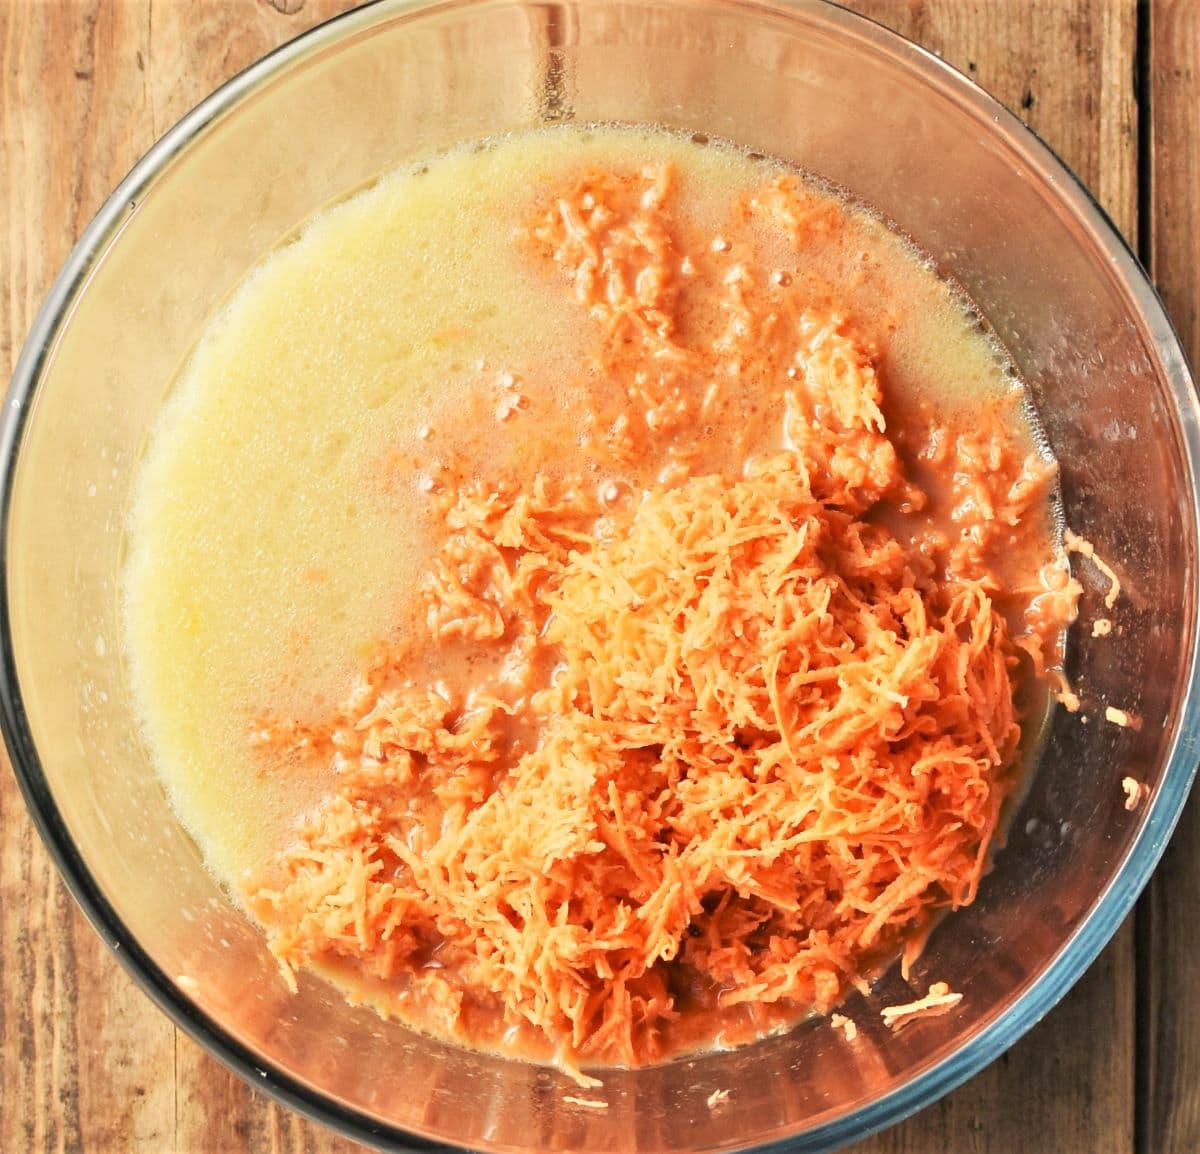 Grated sweet potato in milk mixture in bowl.